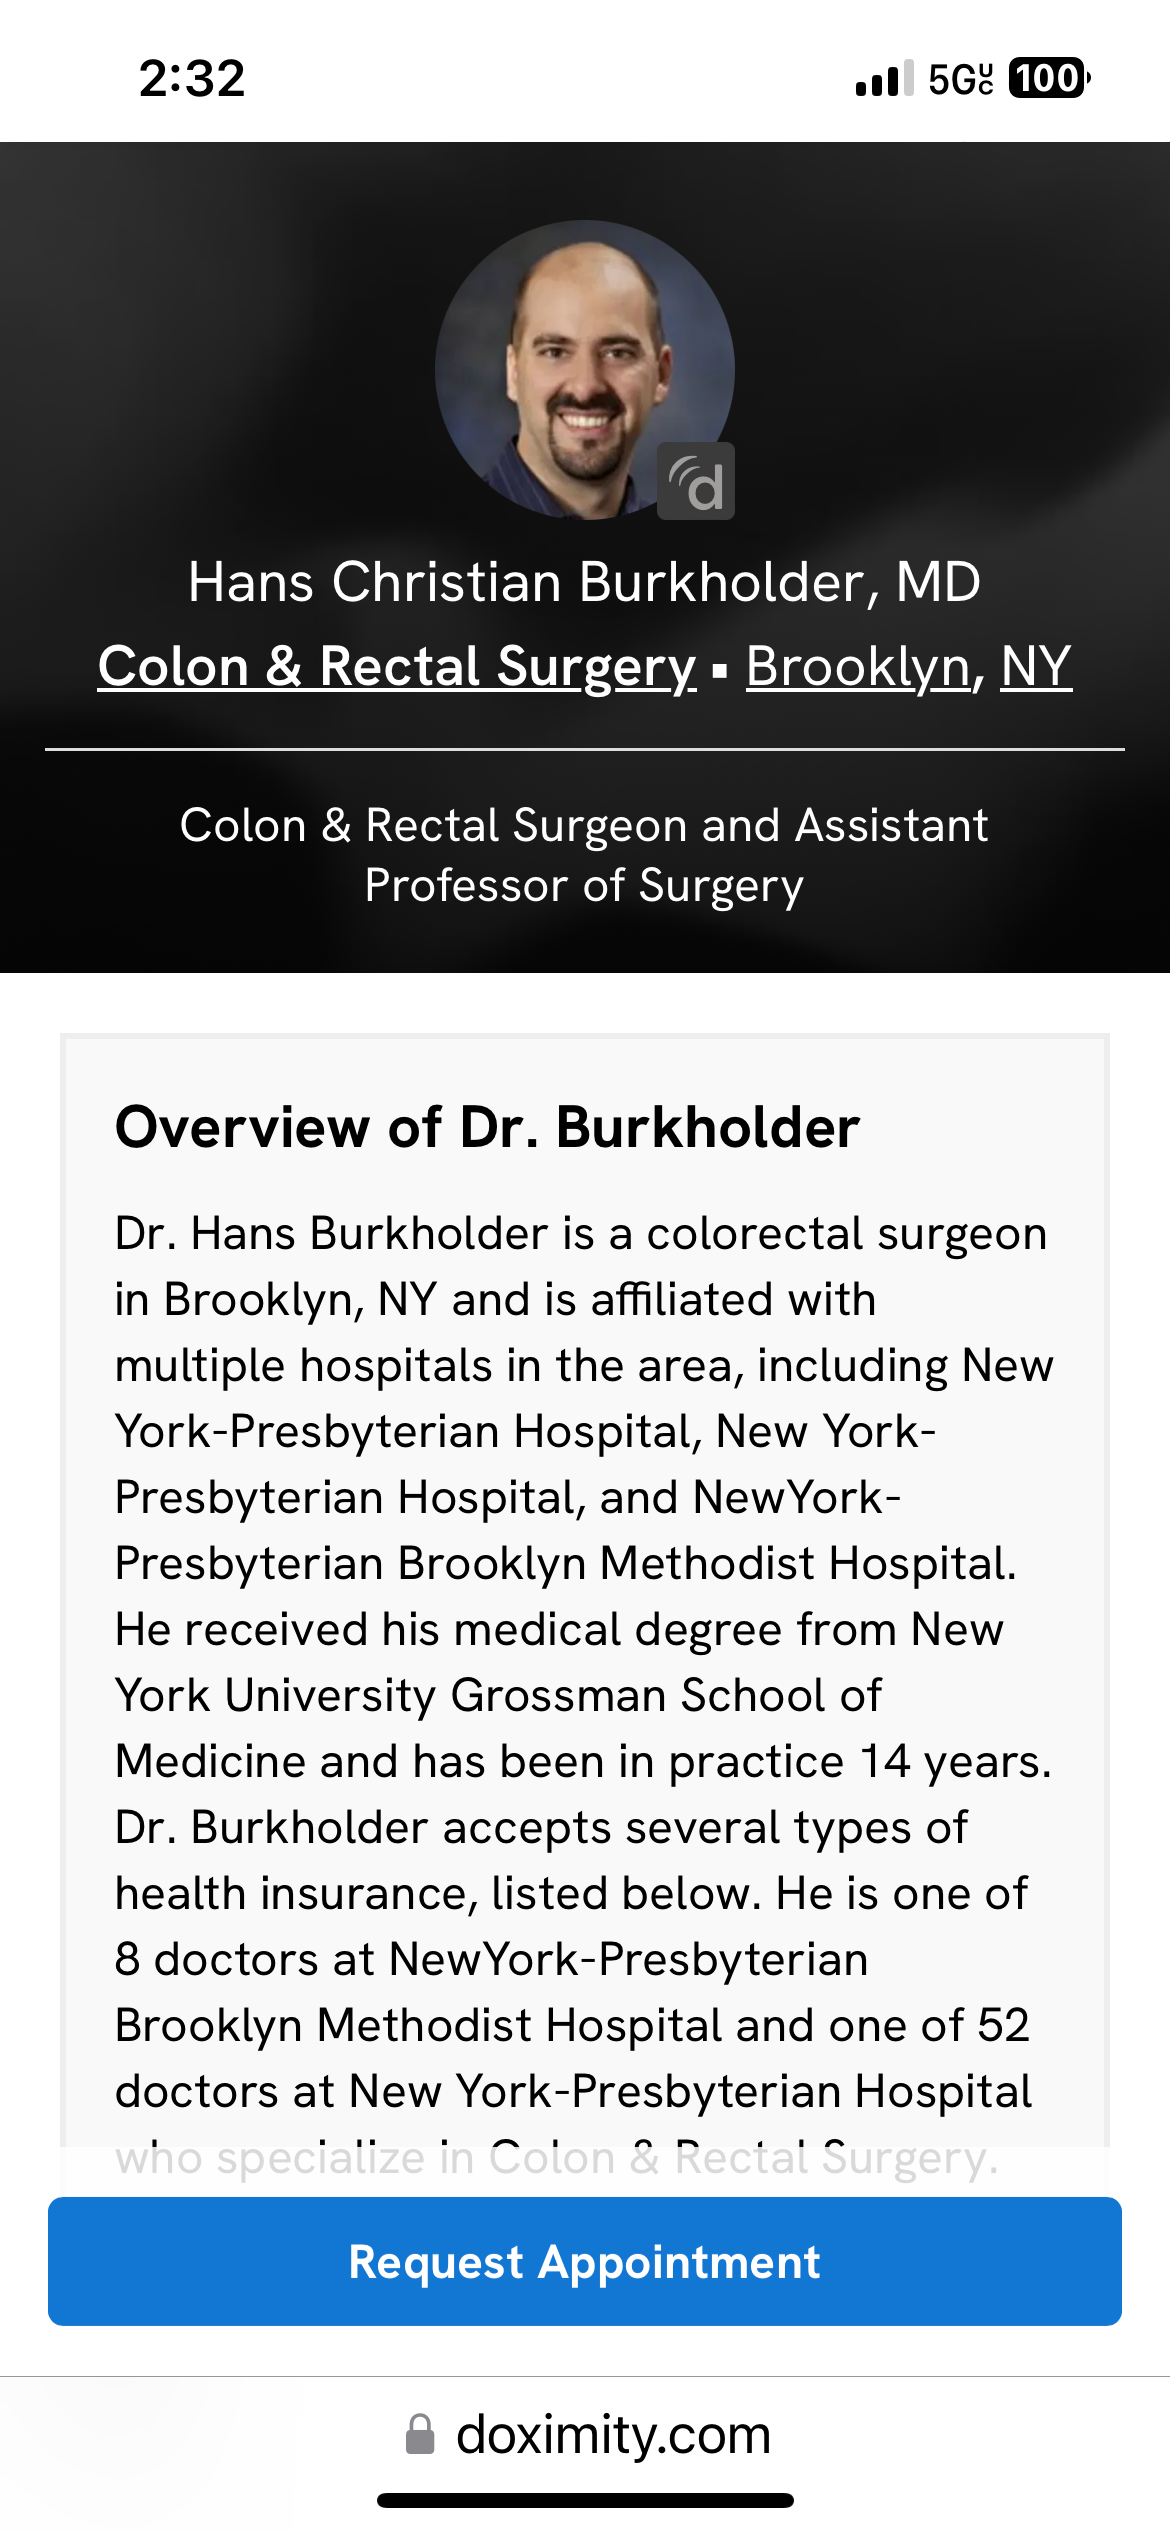 Hans Christian Burkholder, MD Colorectal Surgeon